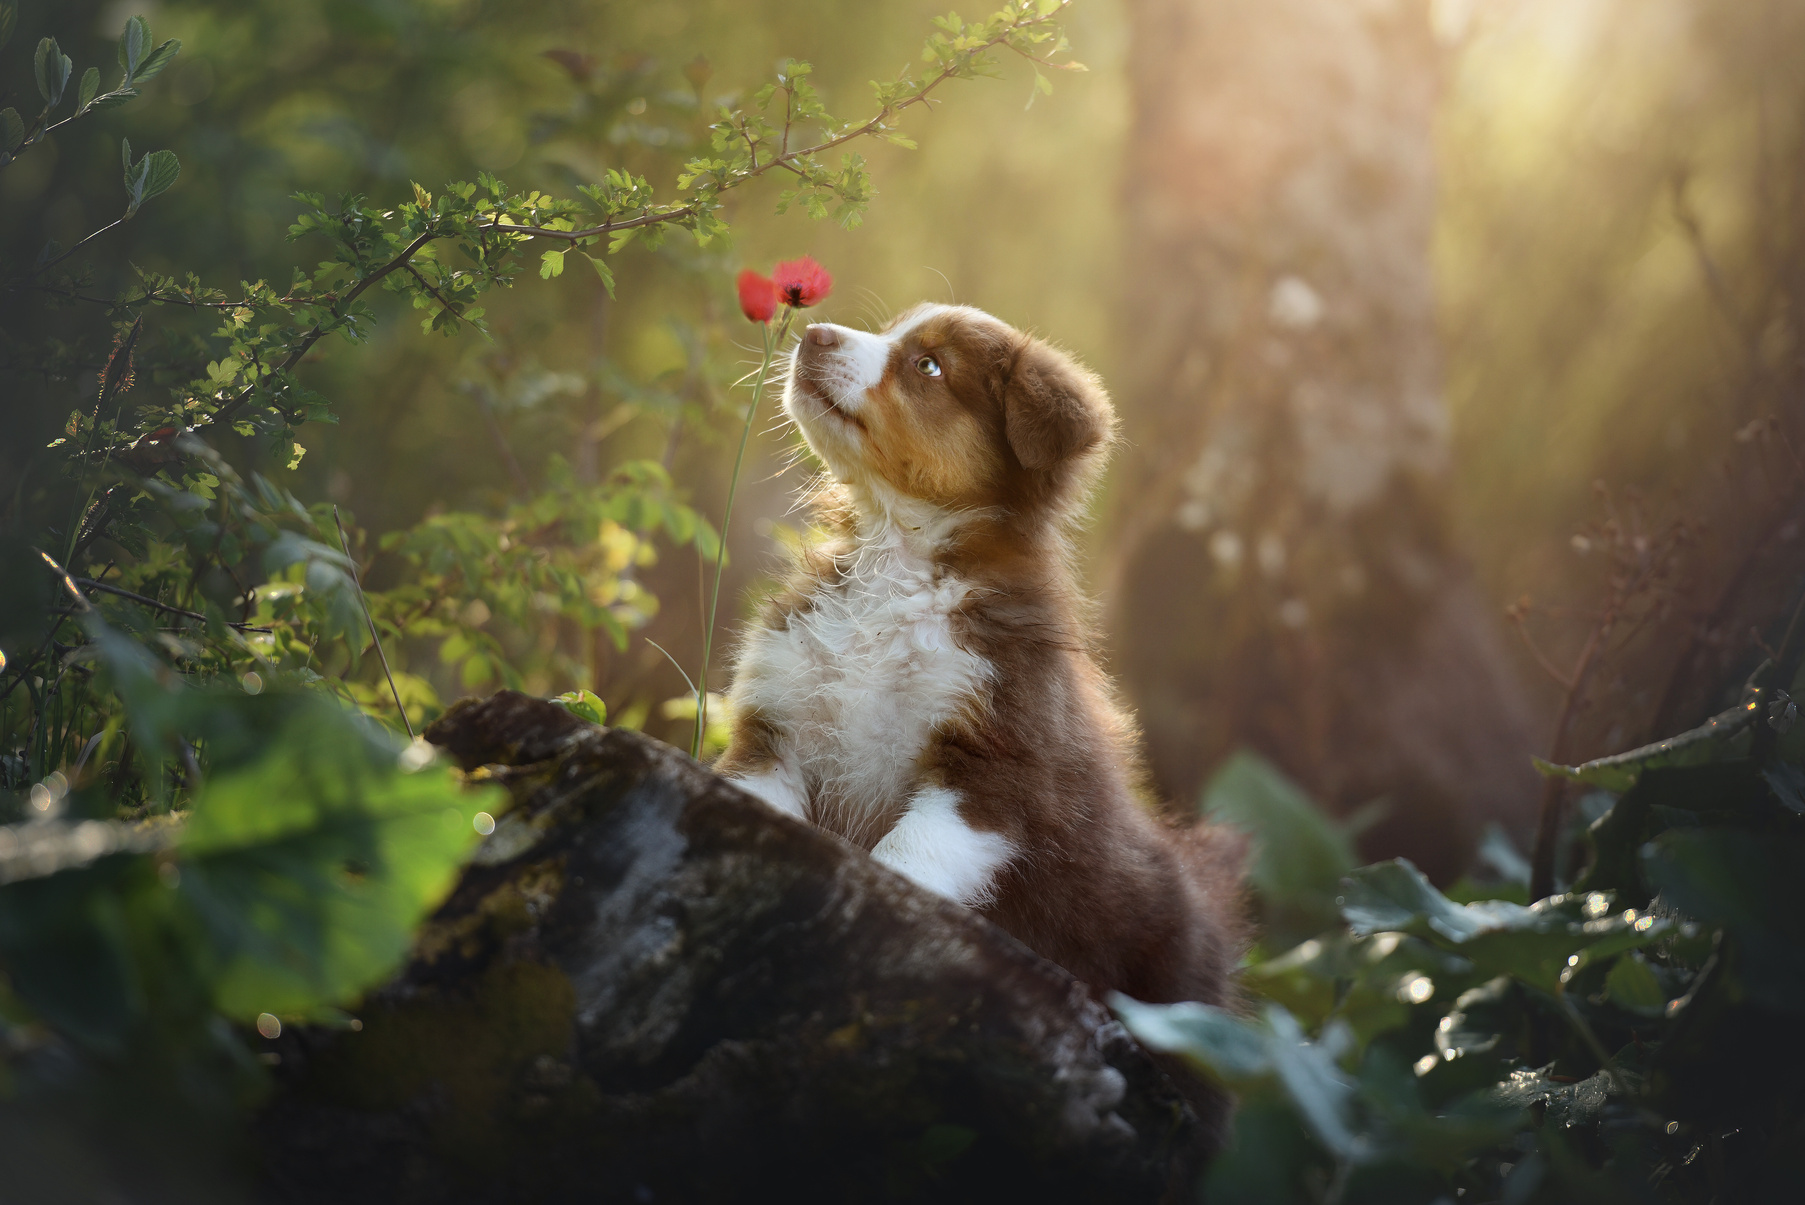 Puppy Dog Smelling a Flower  